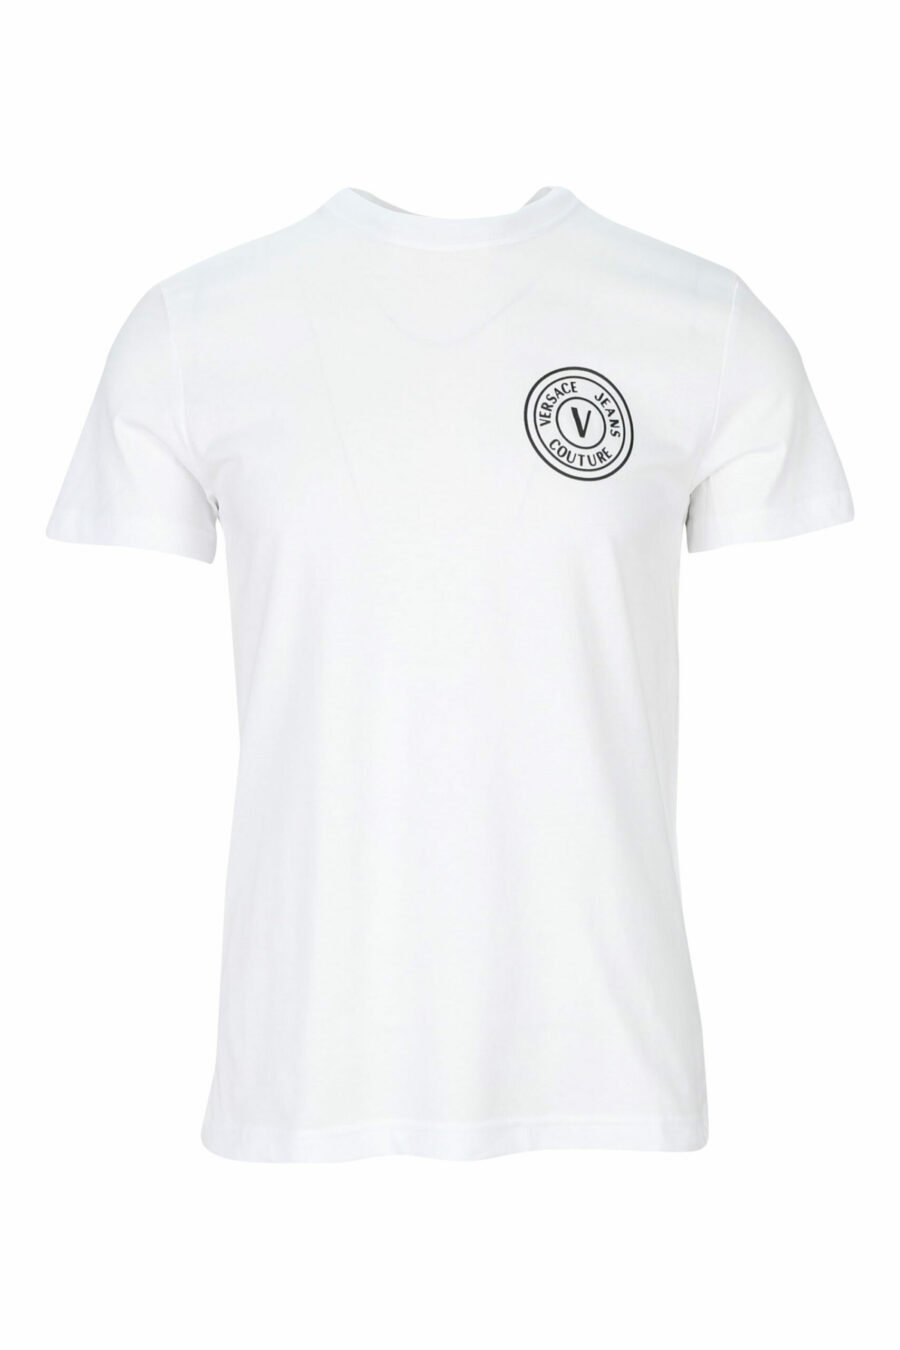 T-shirt blanc avec mini-logo circulaire noir - 8052019468526 scaled